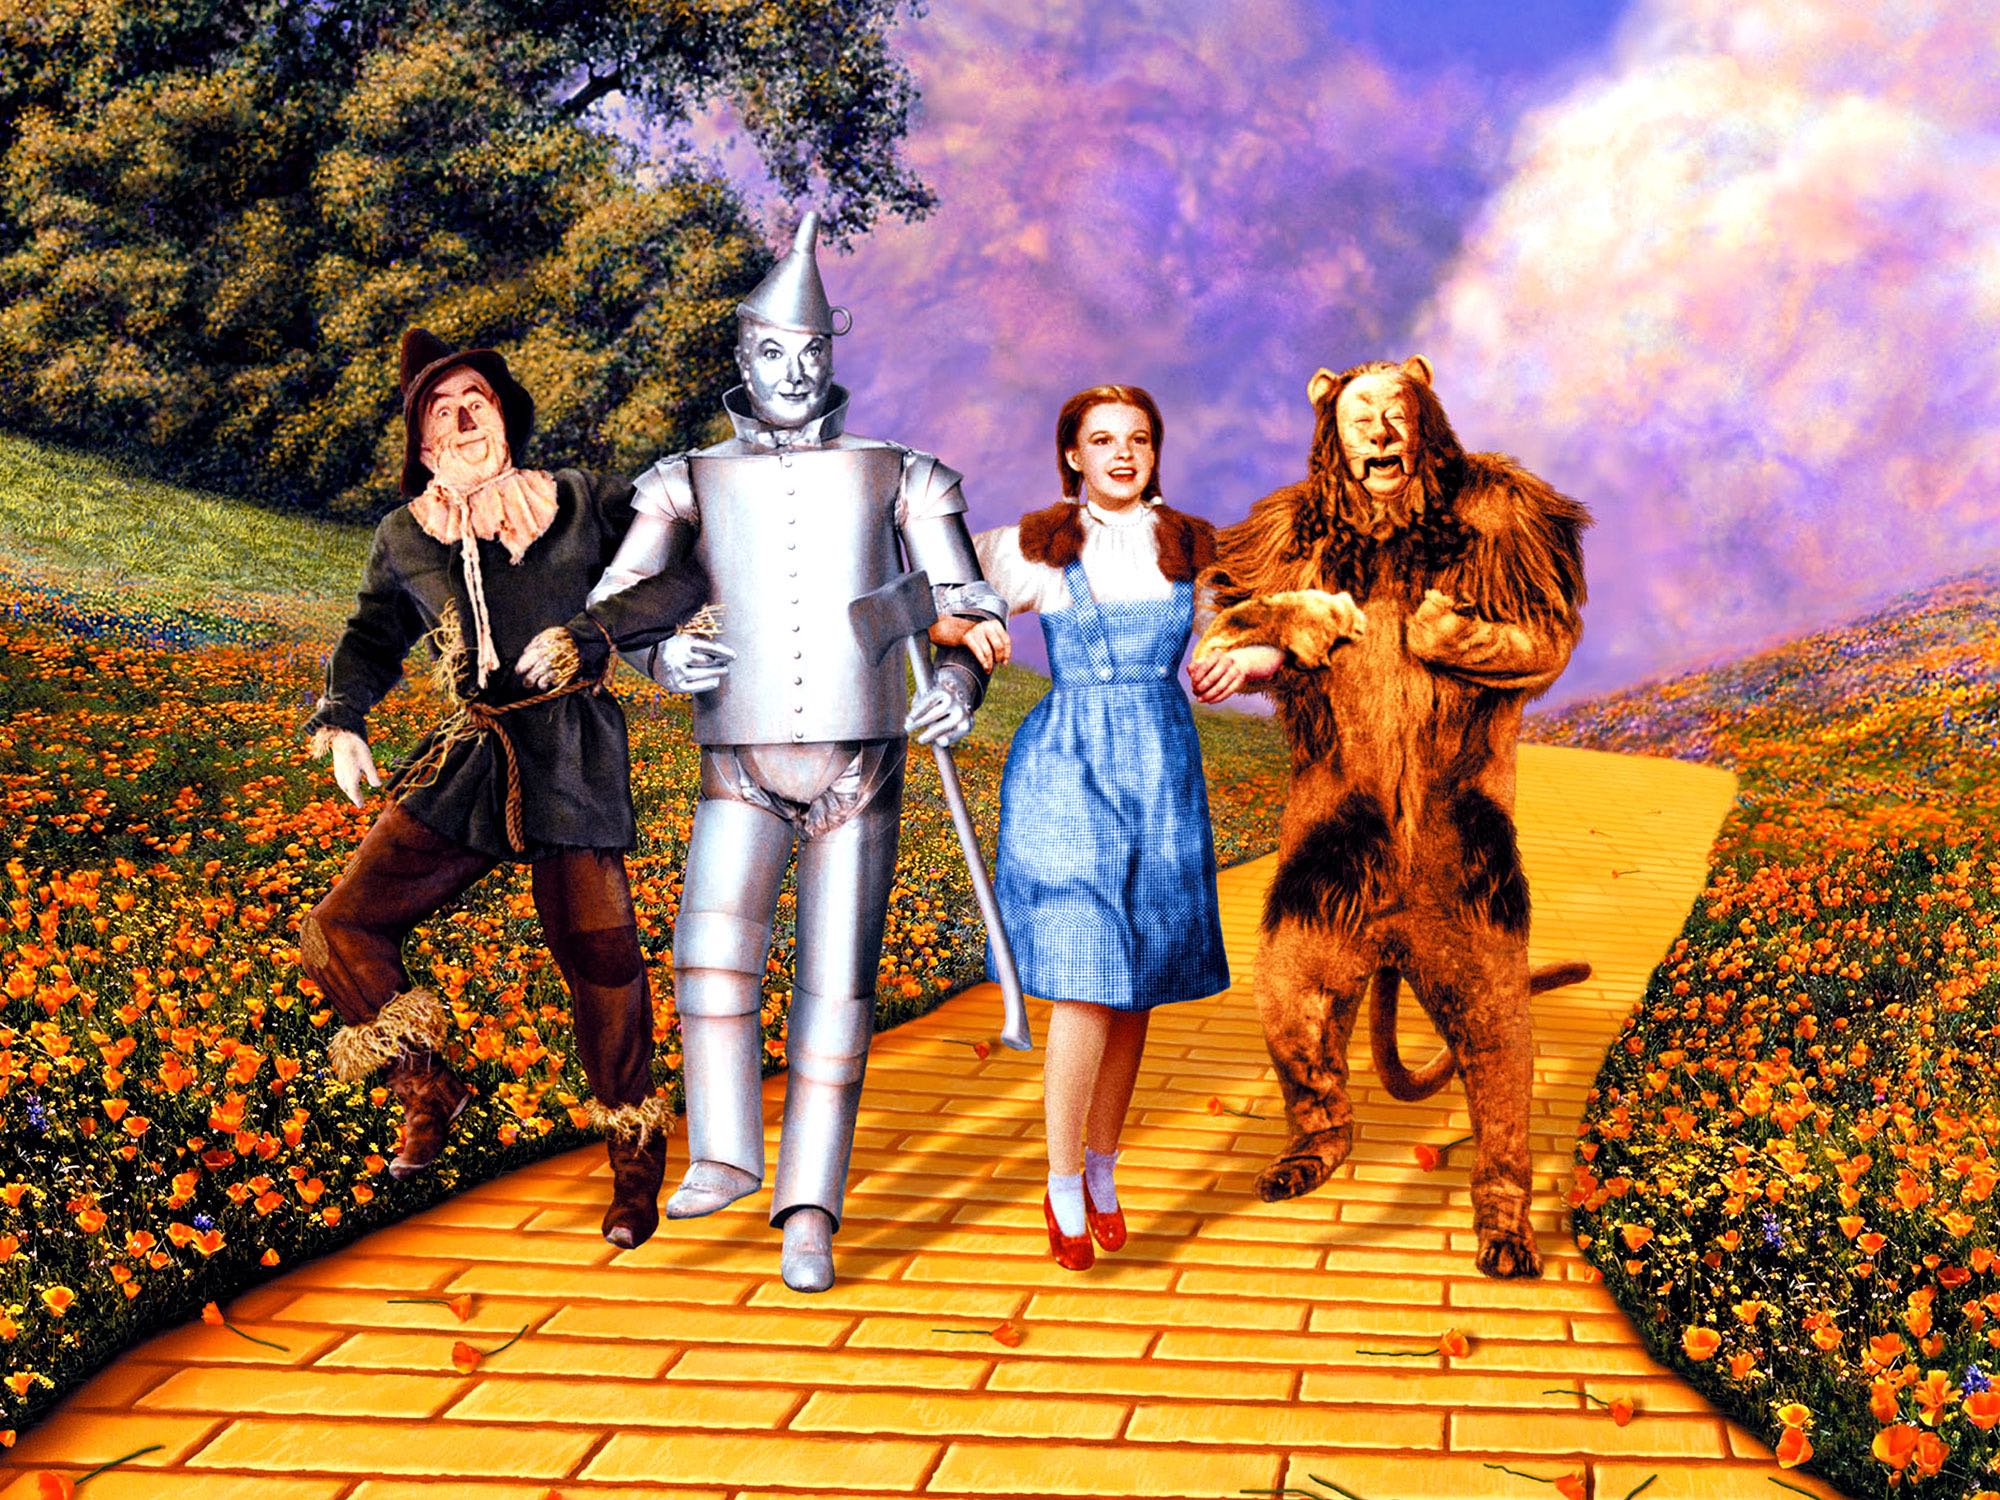 devotudoaocinema.com.br - "O Mágico de Oz", de Victor Fleming, King Vidor e George Cukor